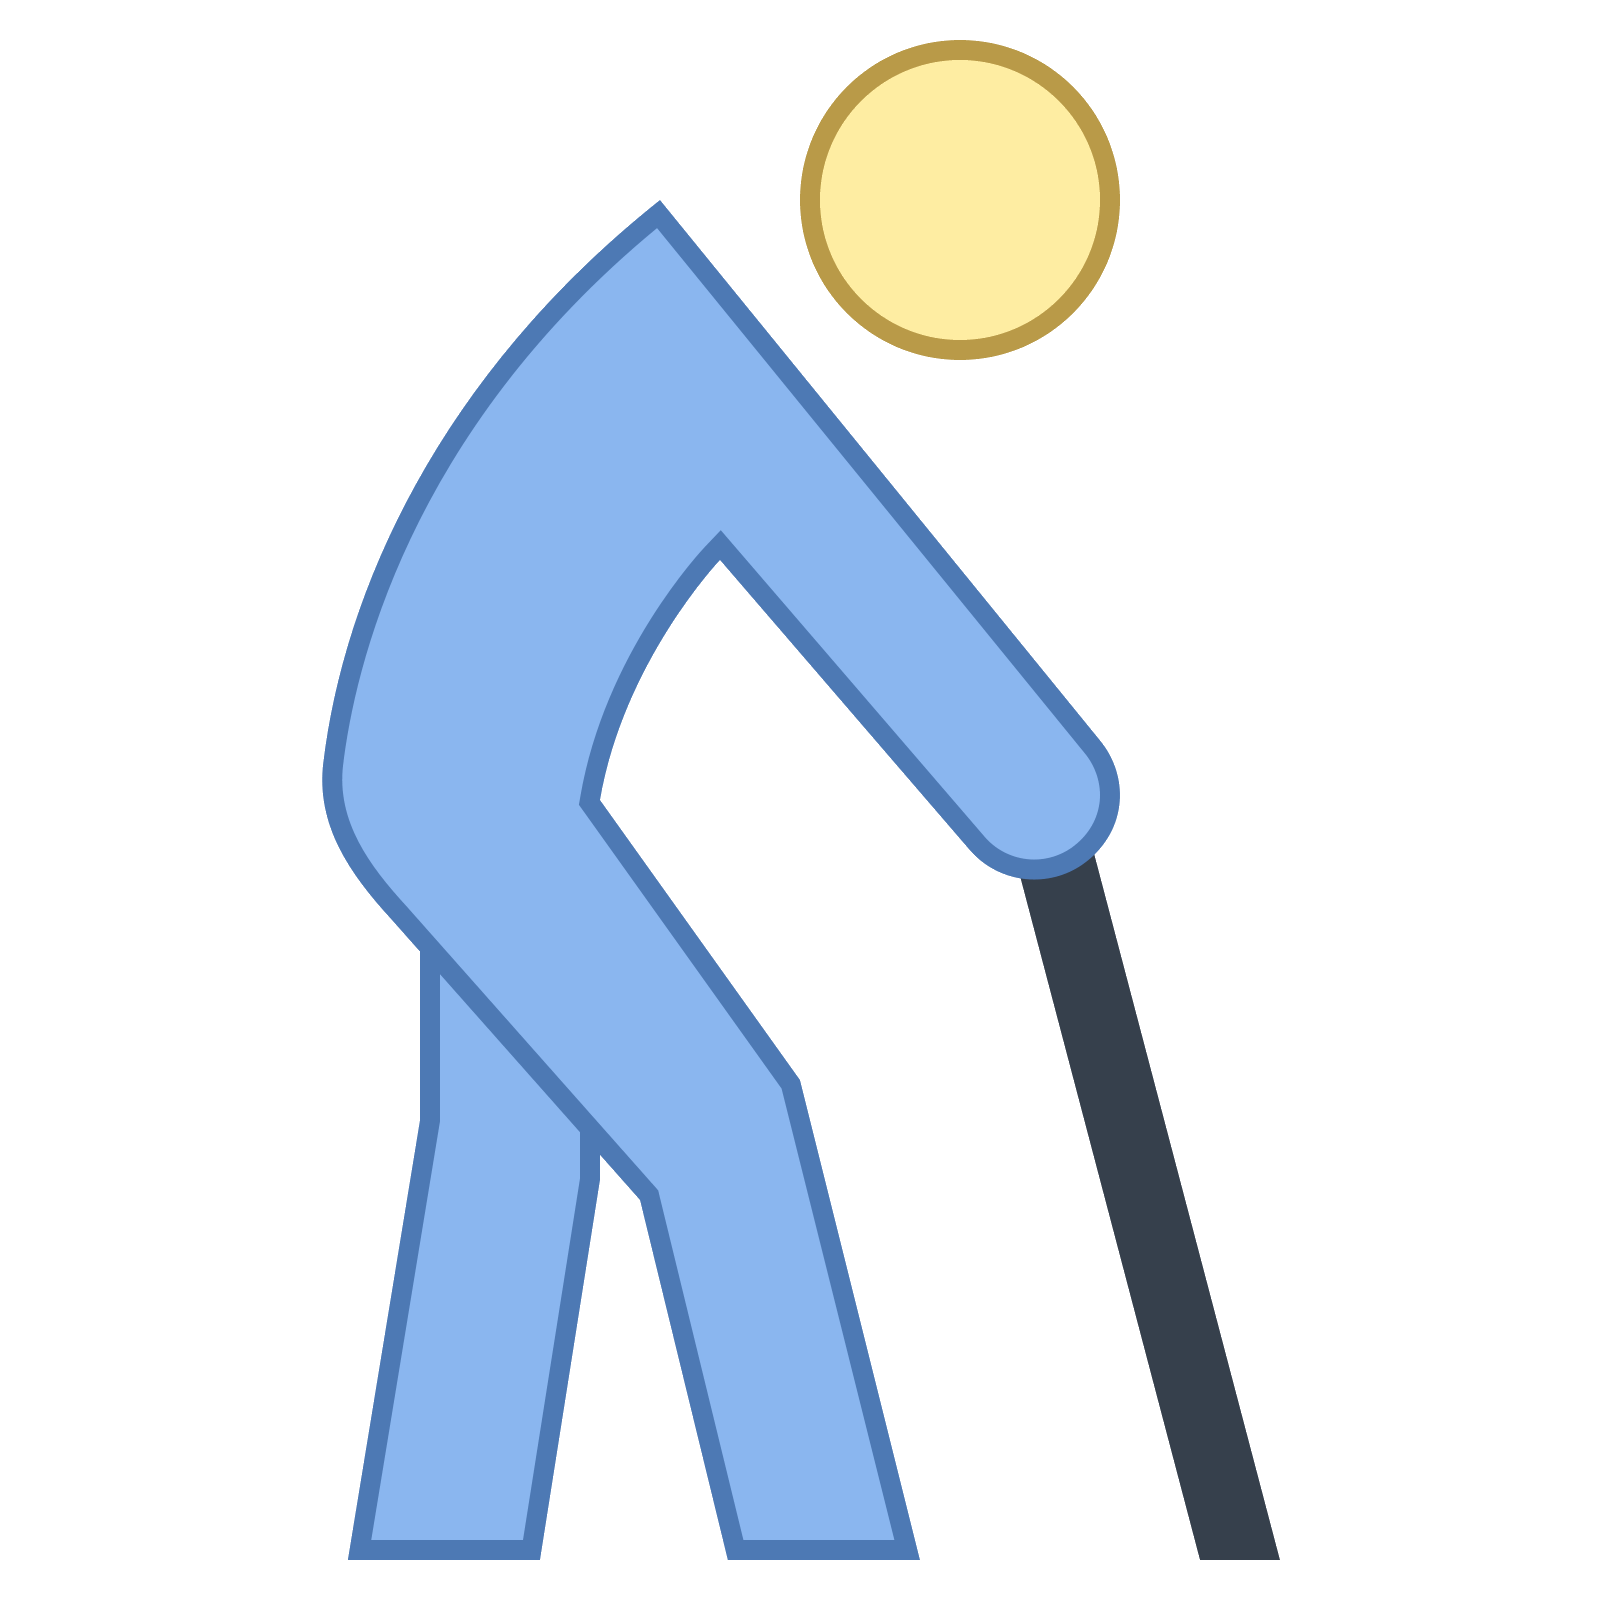 Elderly-man icons | Noun Project